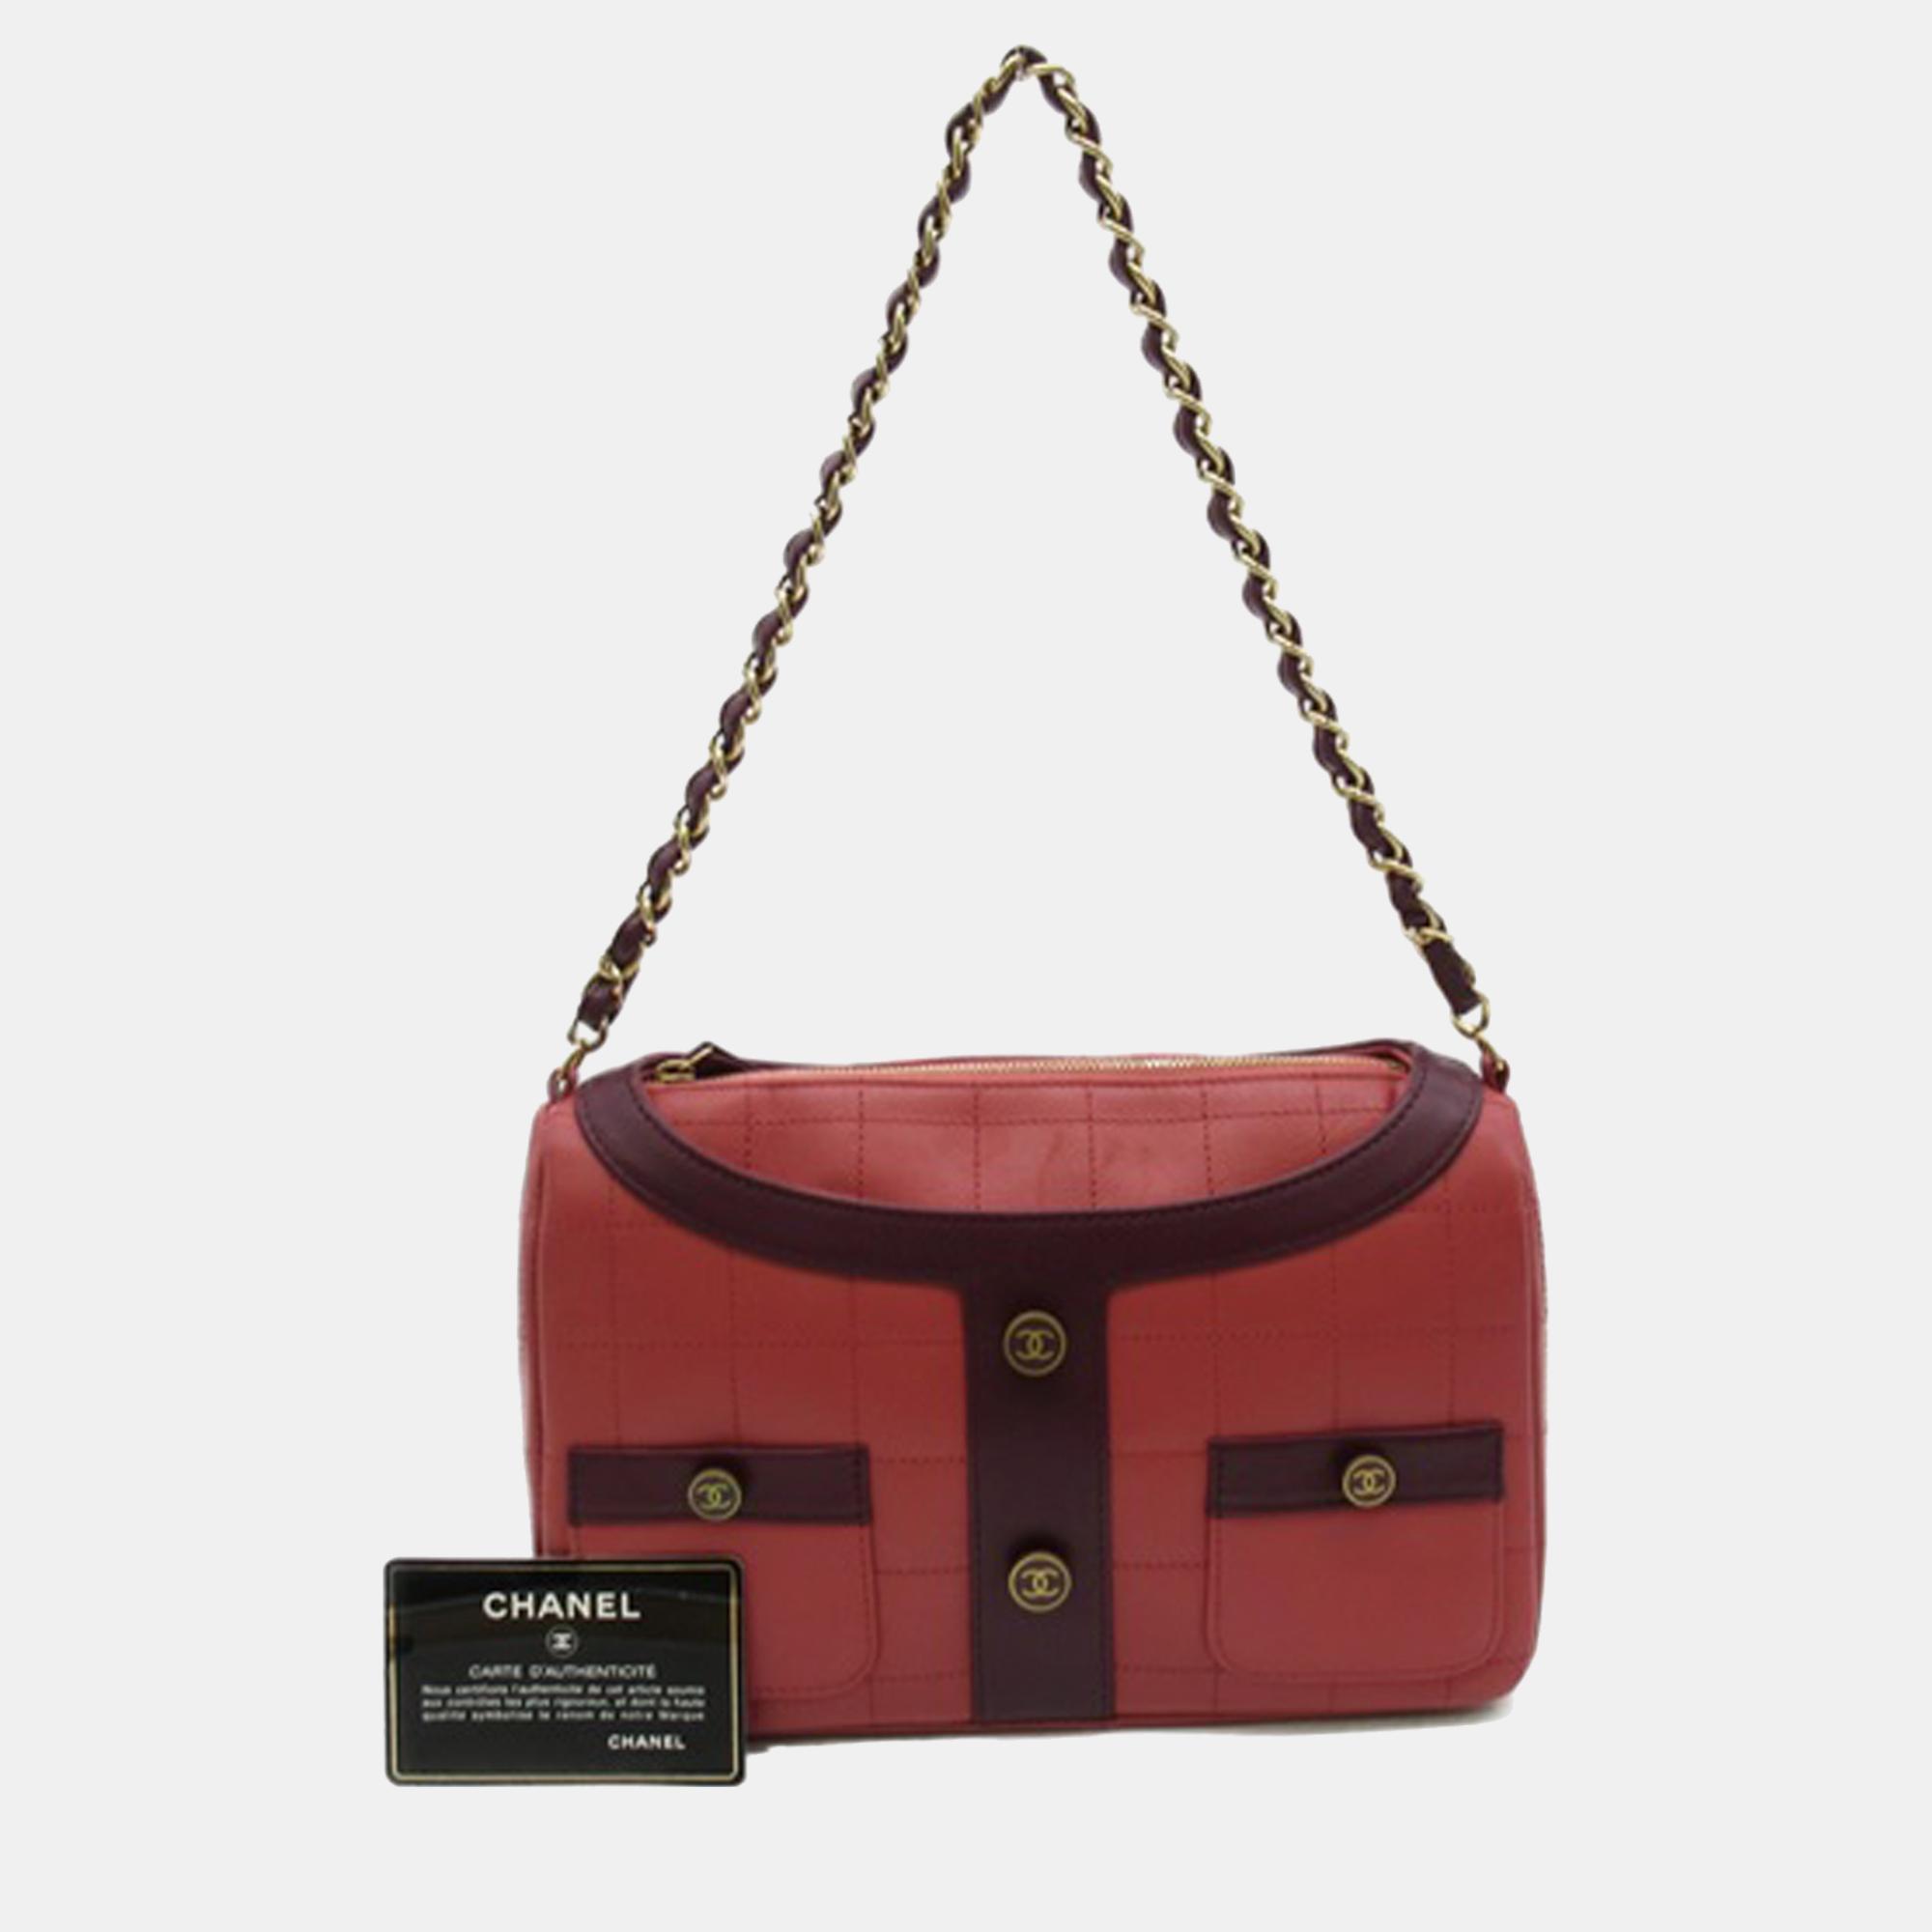 Chanel Red Mademoiselle Jacket Bag